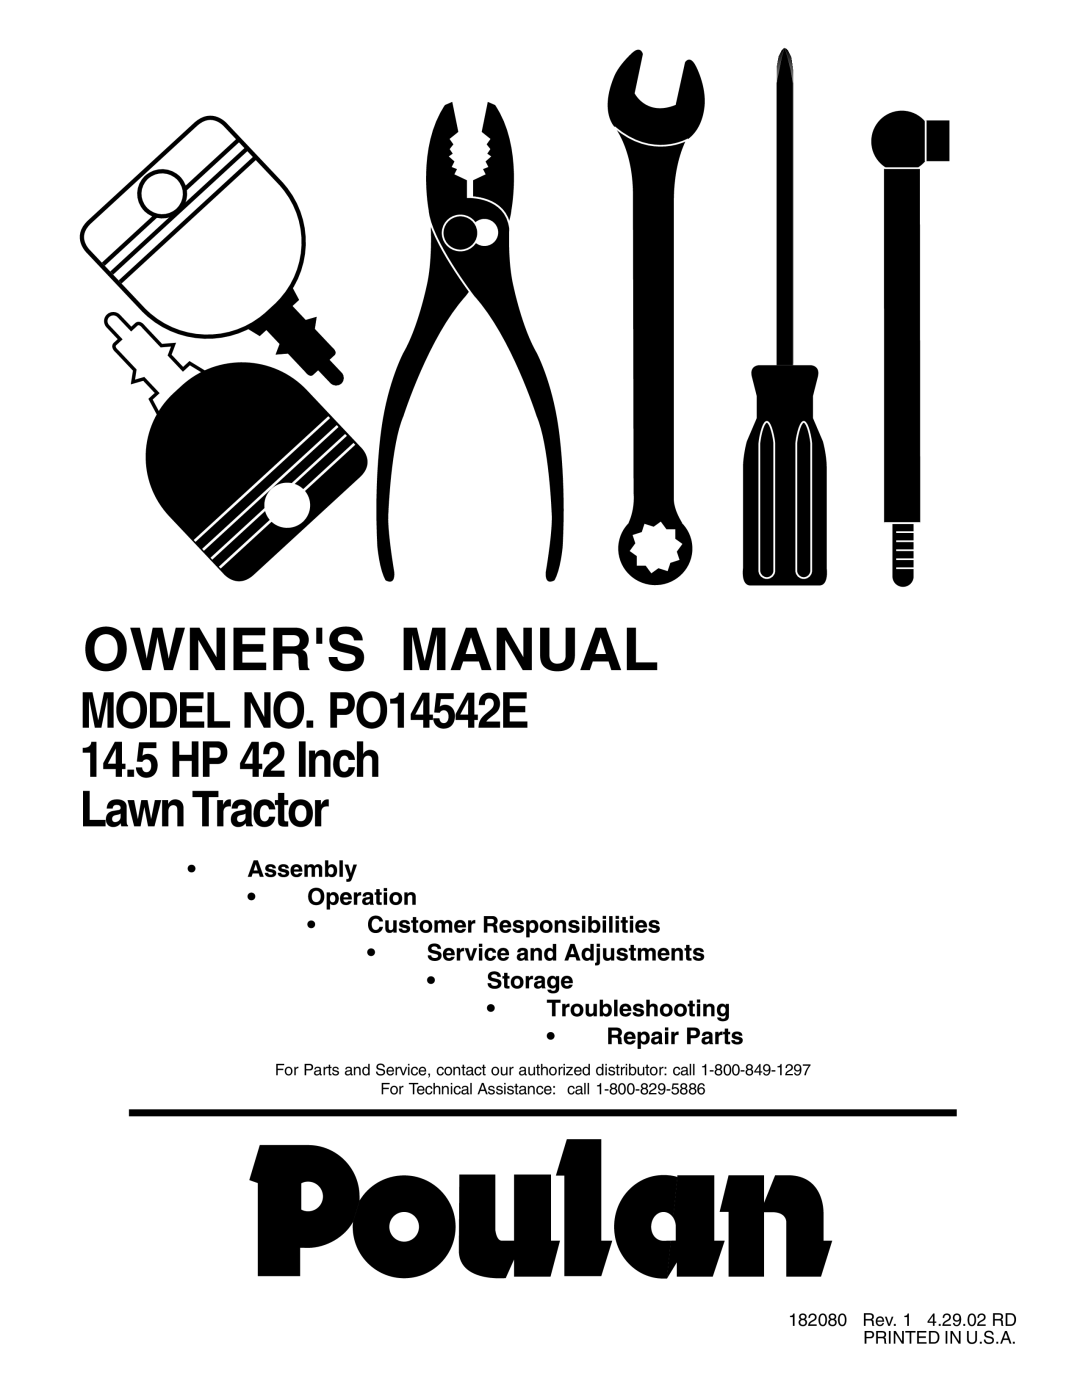 Poulan manual MODEL NO. PO14542E 14.5HP 42 Inch Lawn Tractor, 182080 Rev. 1 4.29.02 RD PRINTED IN U.S.A 